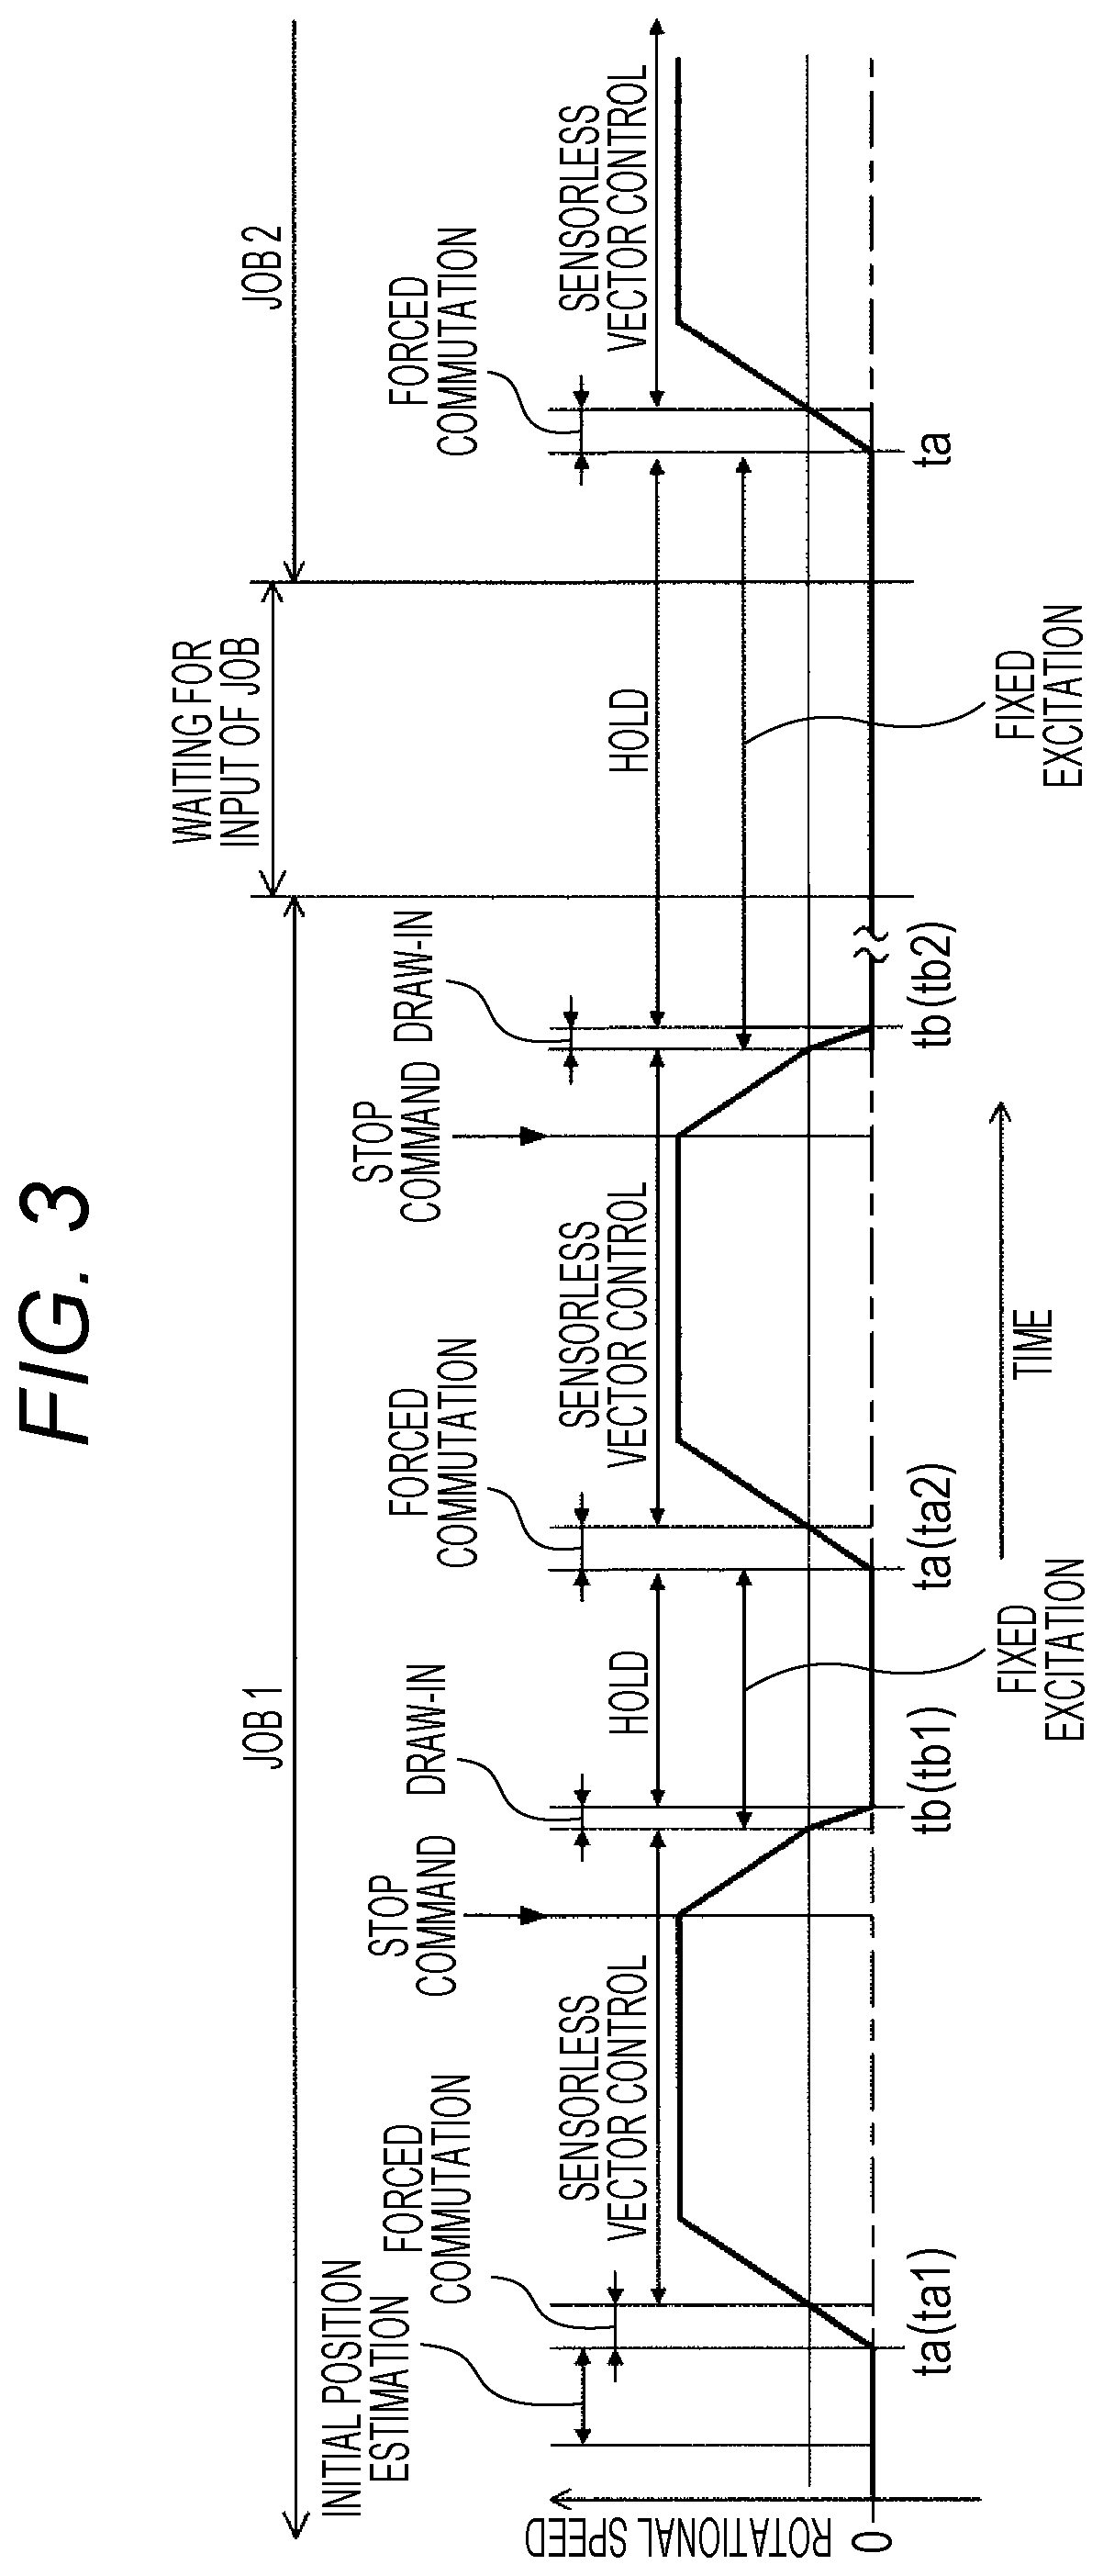 Motor controller, conveyor, image forming apparatus, and motor control method